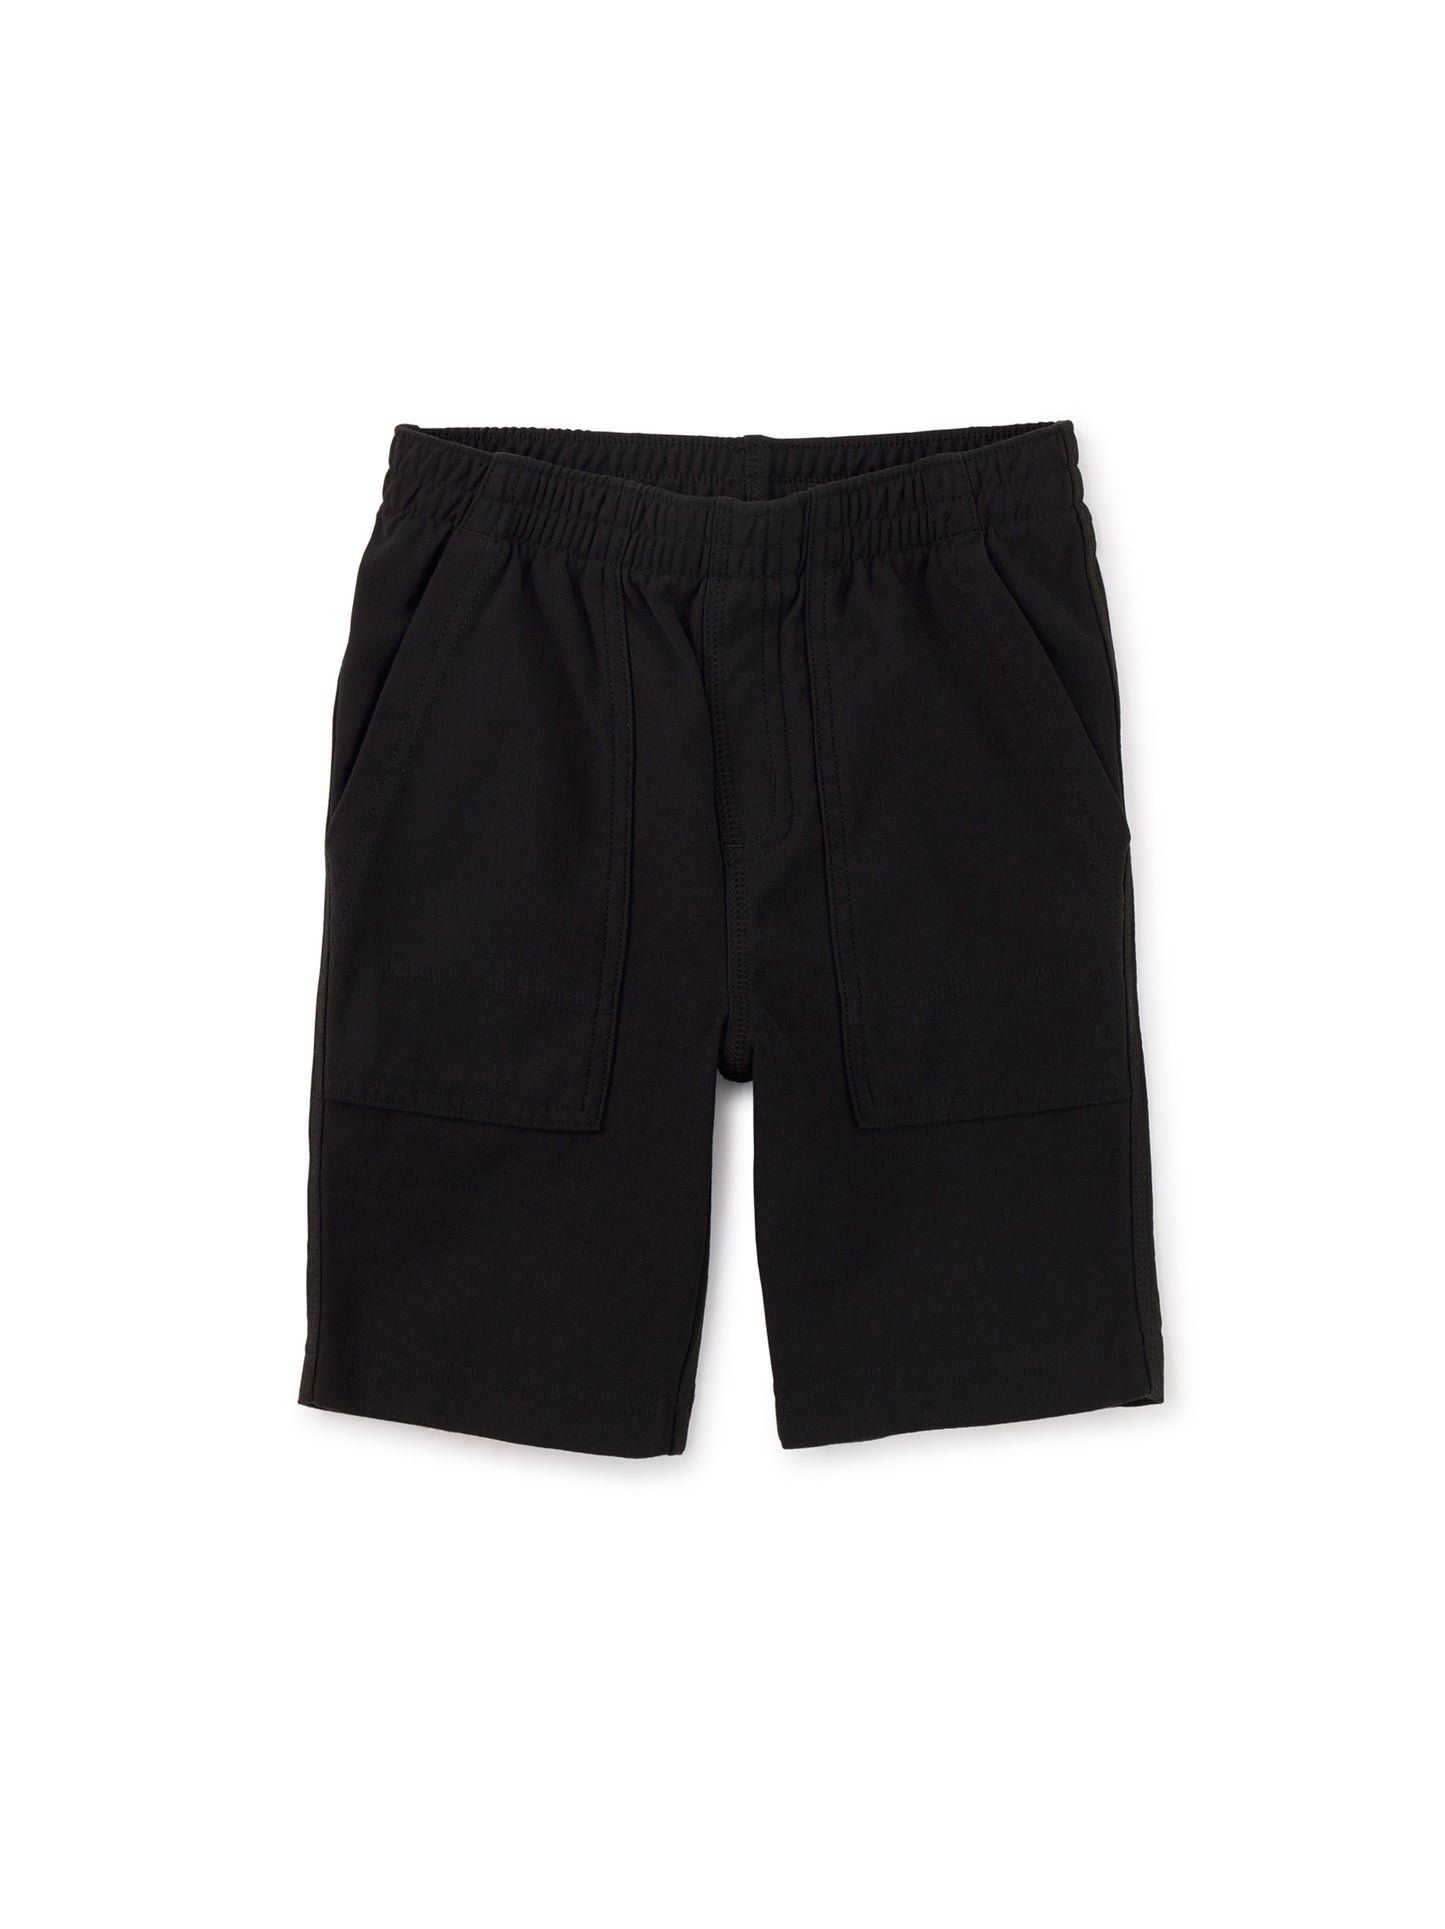 Tea Collection Playwear Shorts - Jet Black